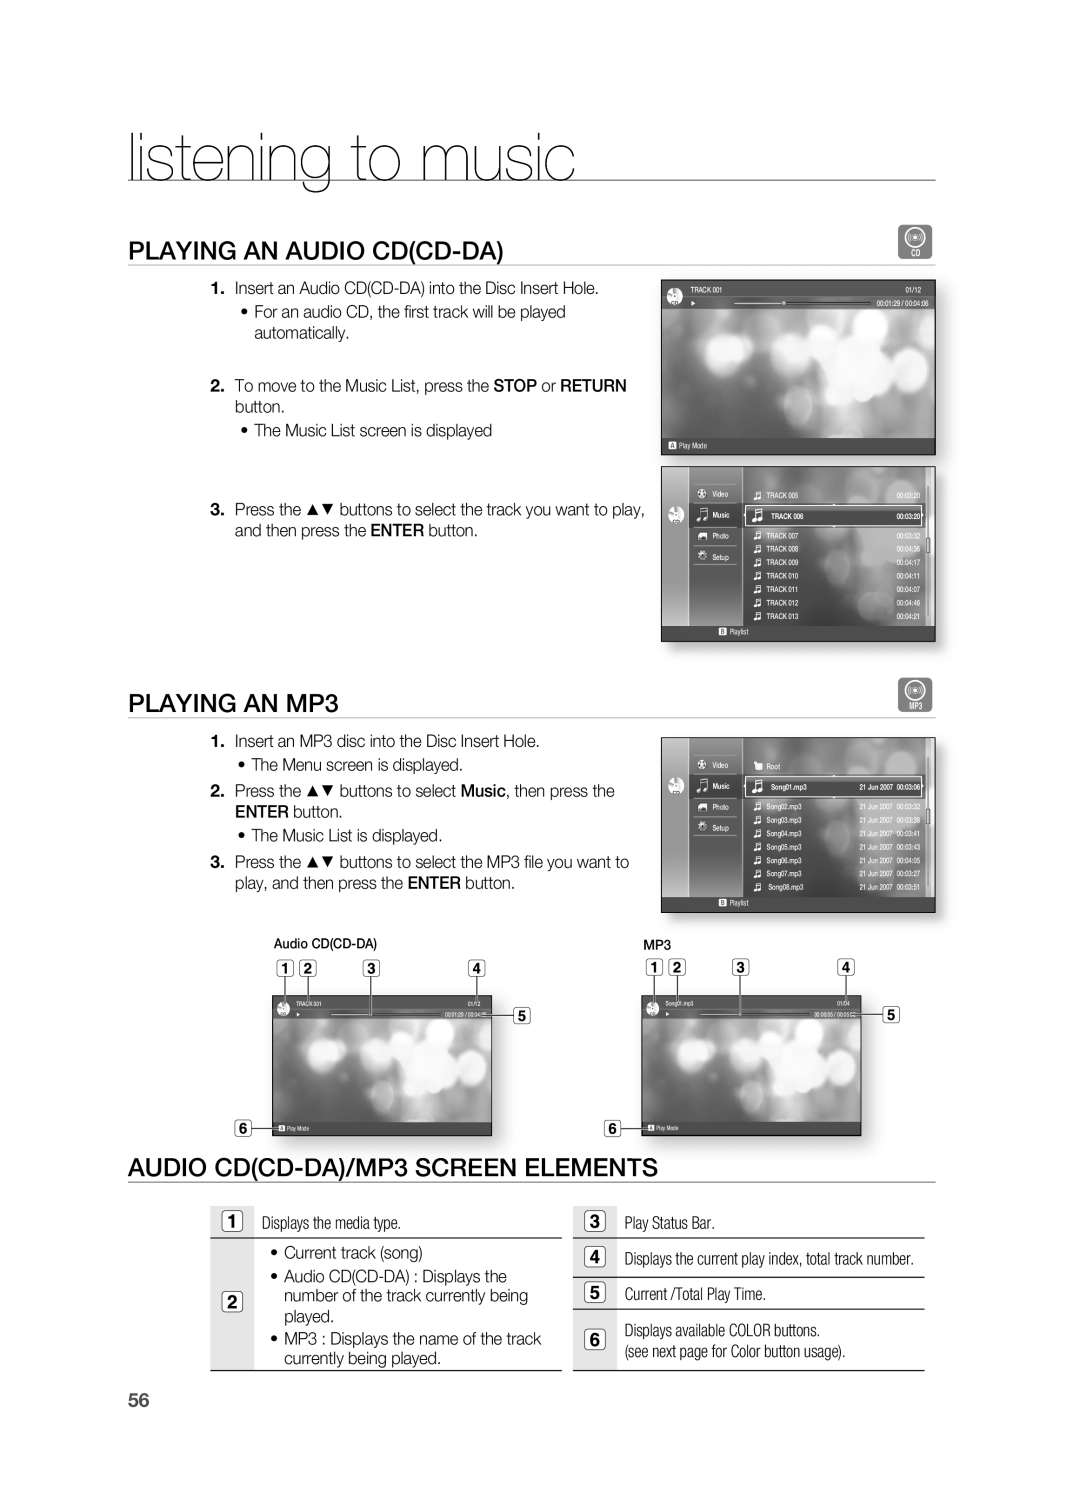 Samsung AH68-02019S manual listening to music, PLAYIng An AUDIO CDCD-DA, PLAYIng An MP3, Audio Cdcd, ELEMEnTS 